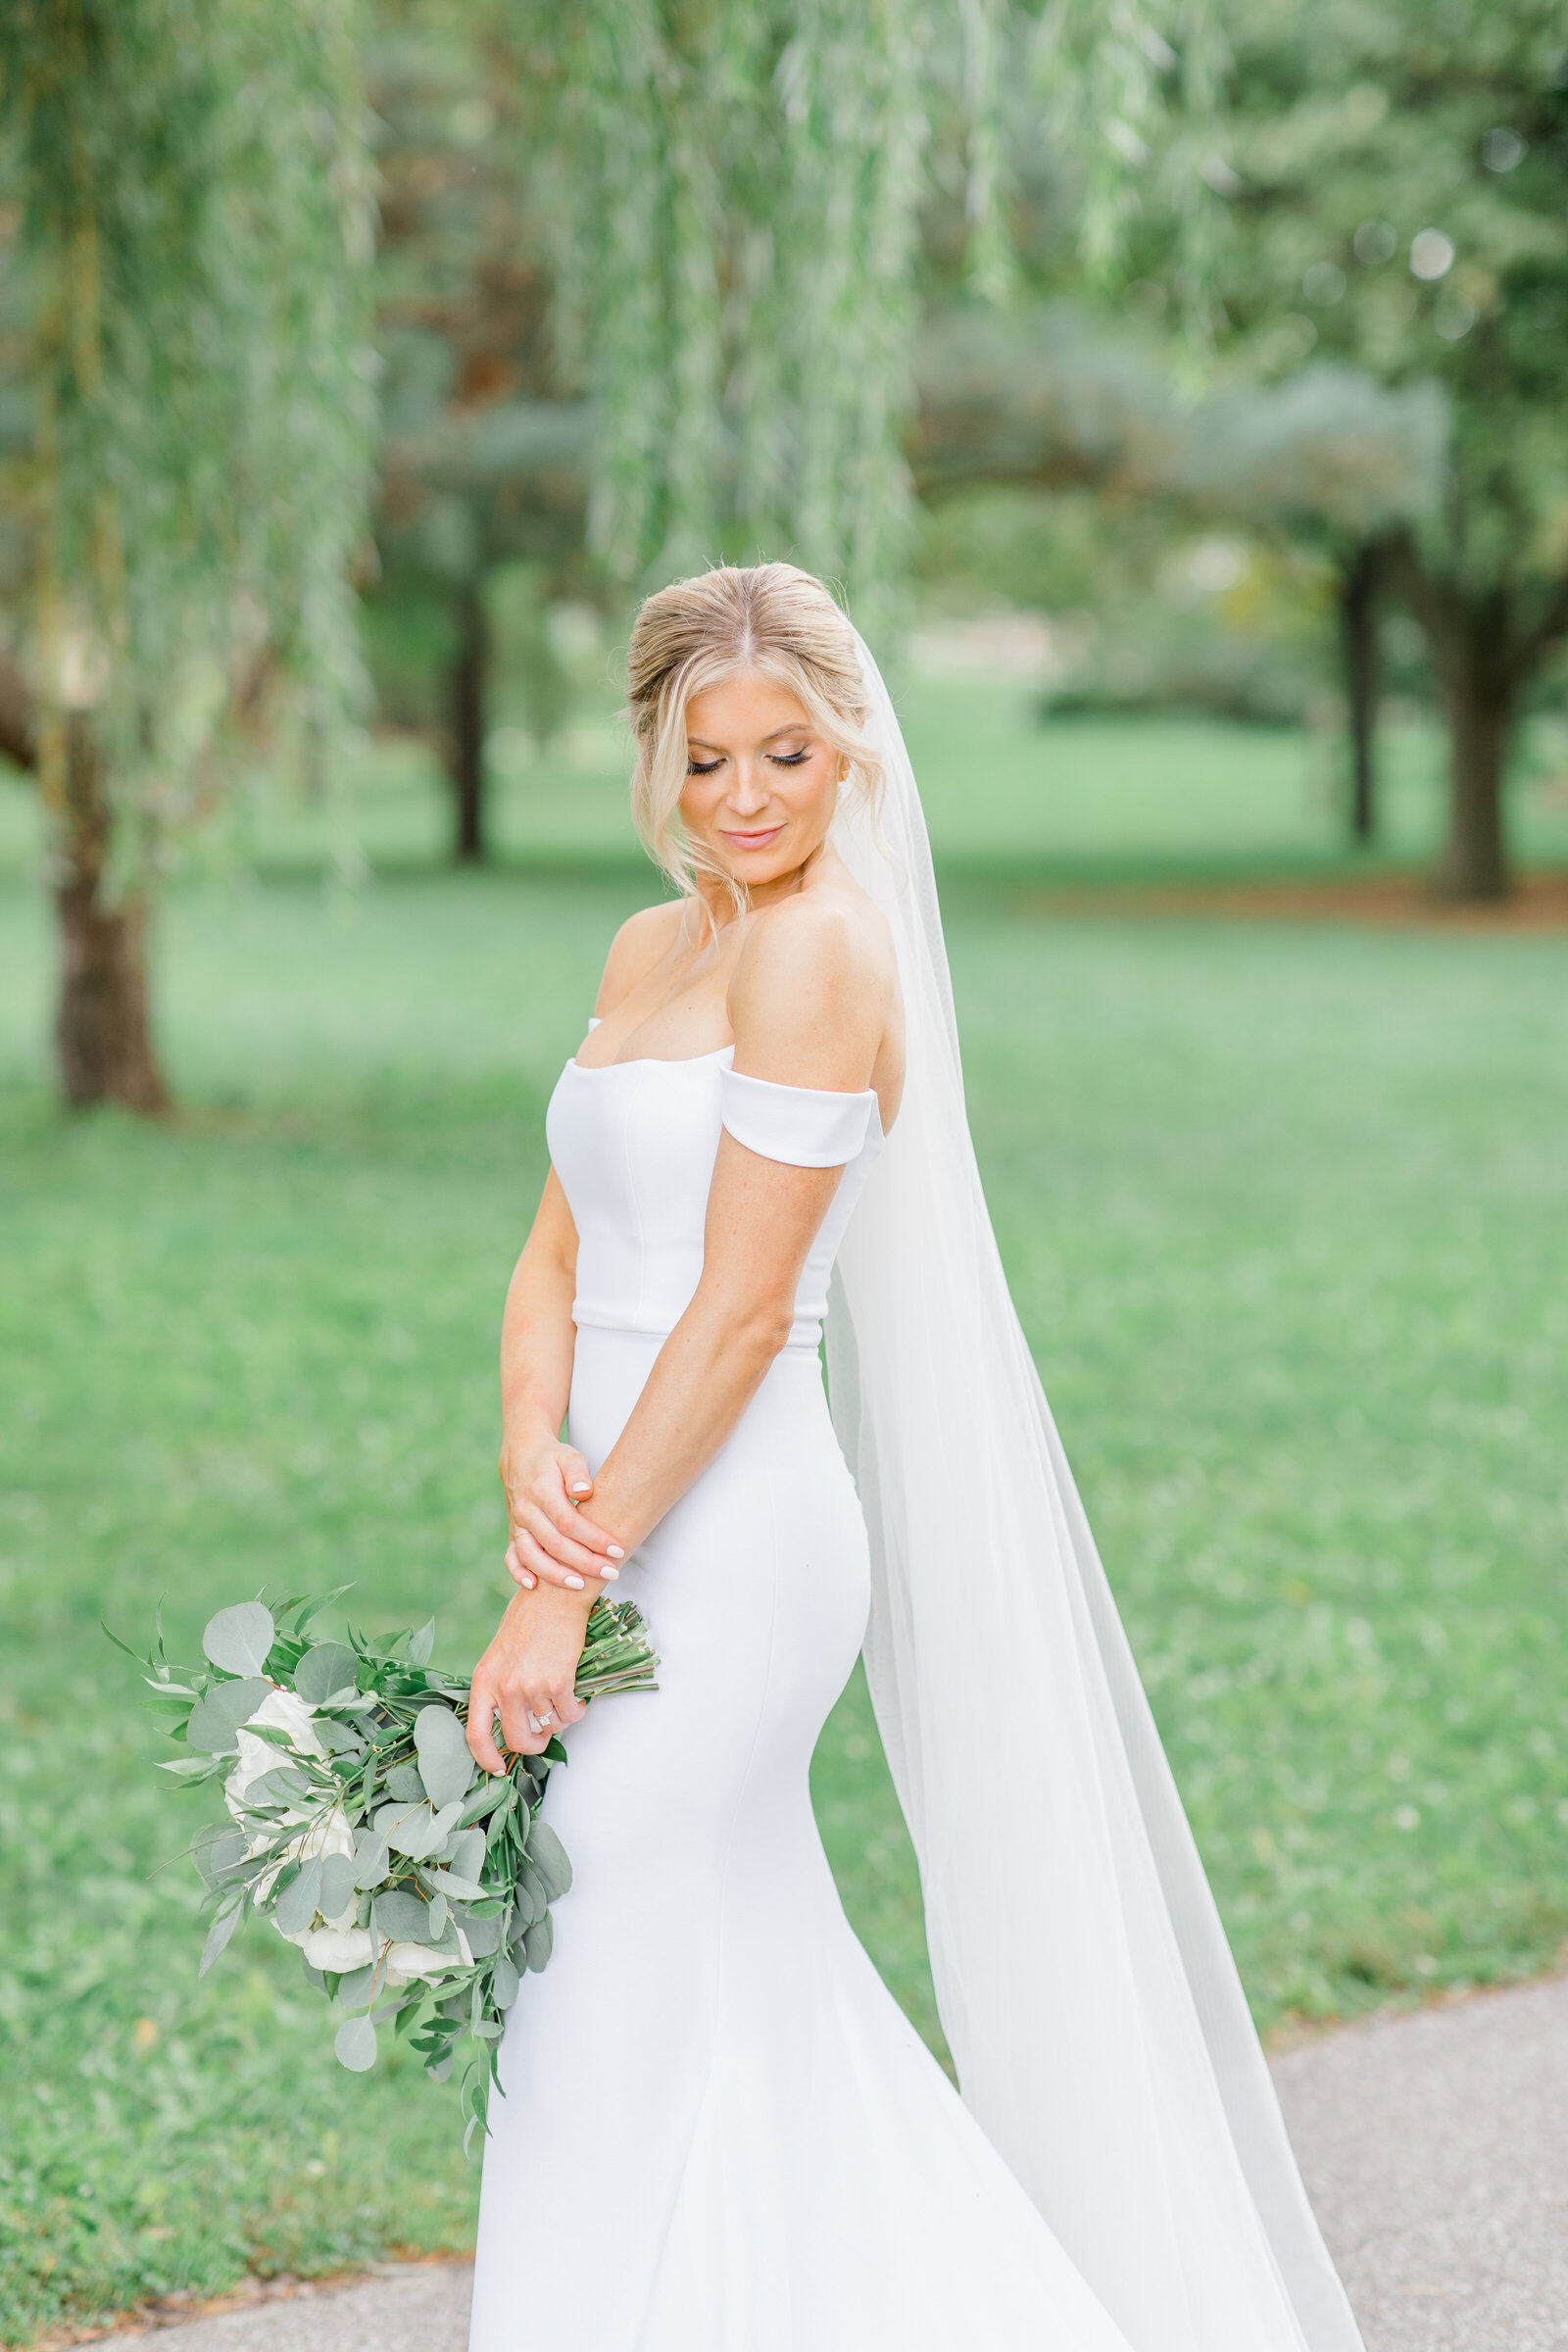 NinaLarocquePhotography__Windsor-Wedding-Photographer26